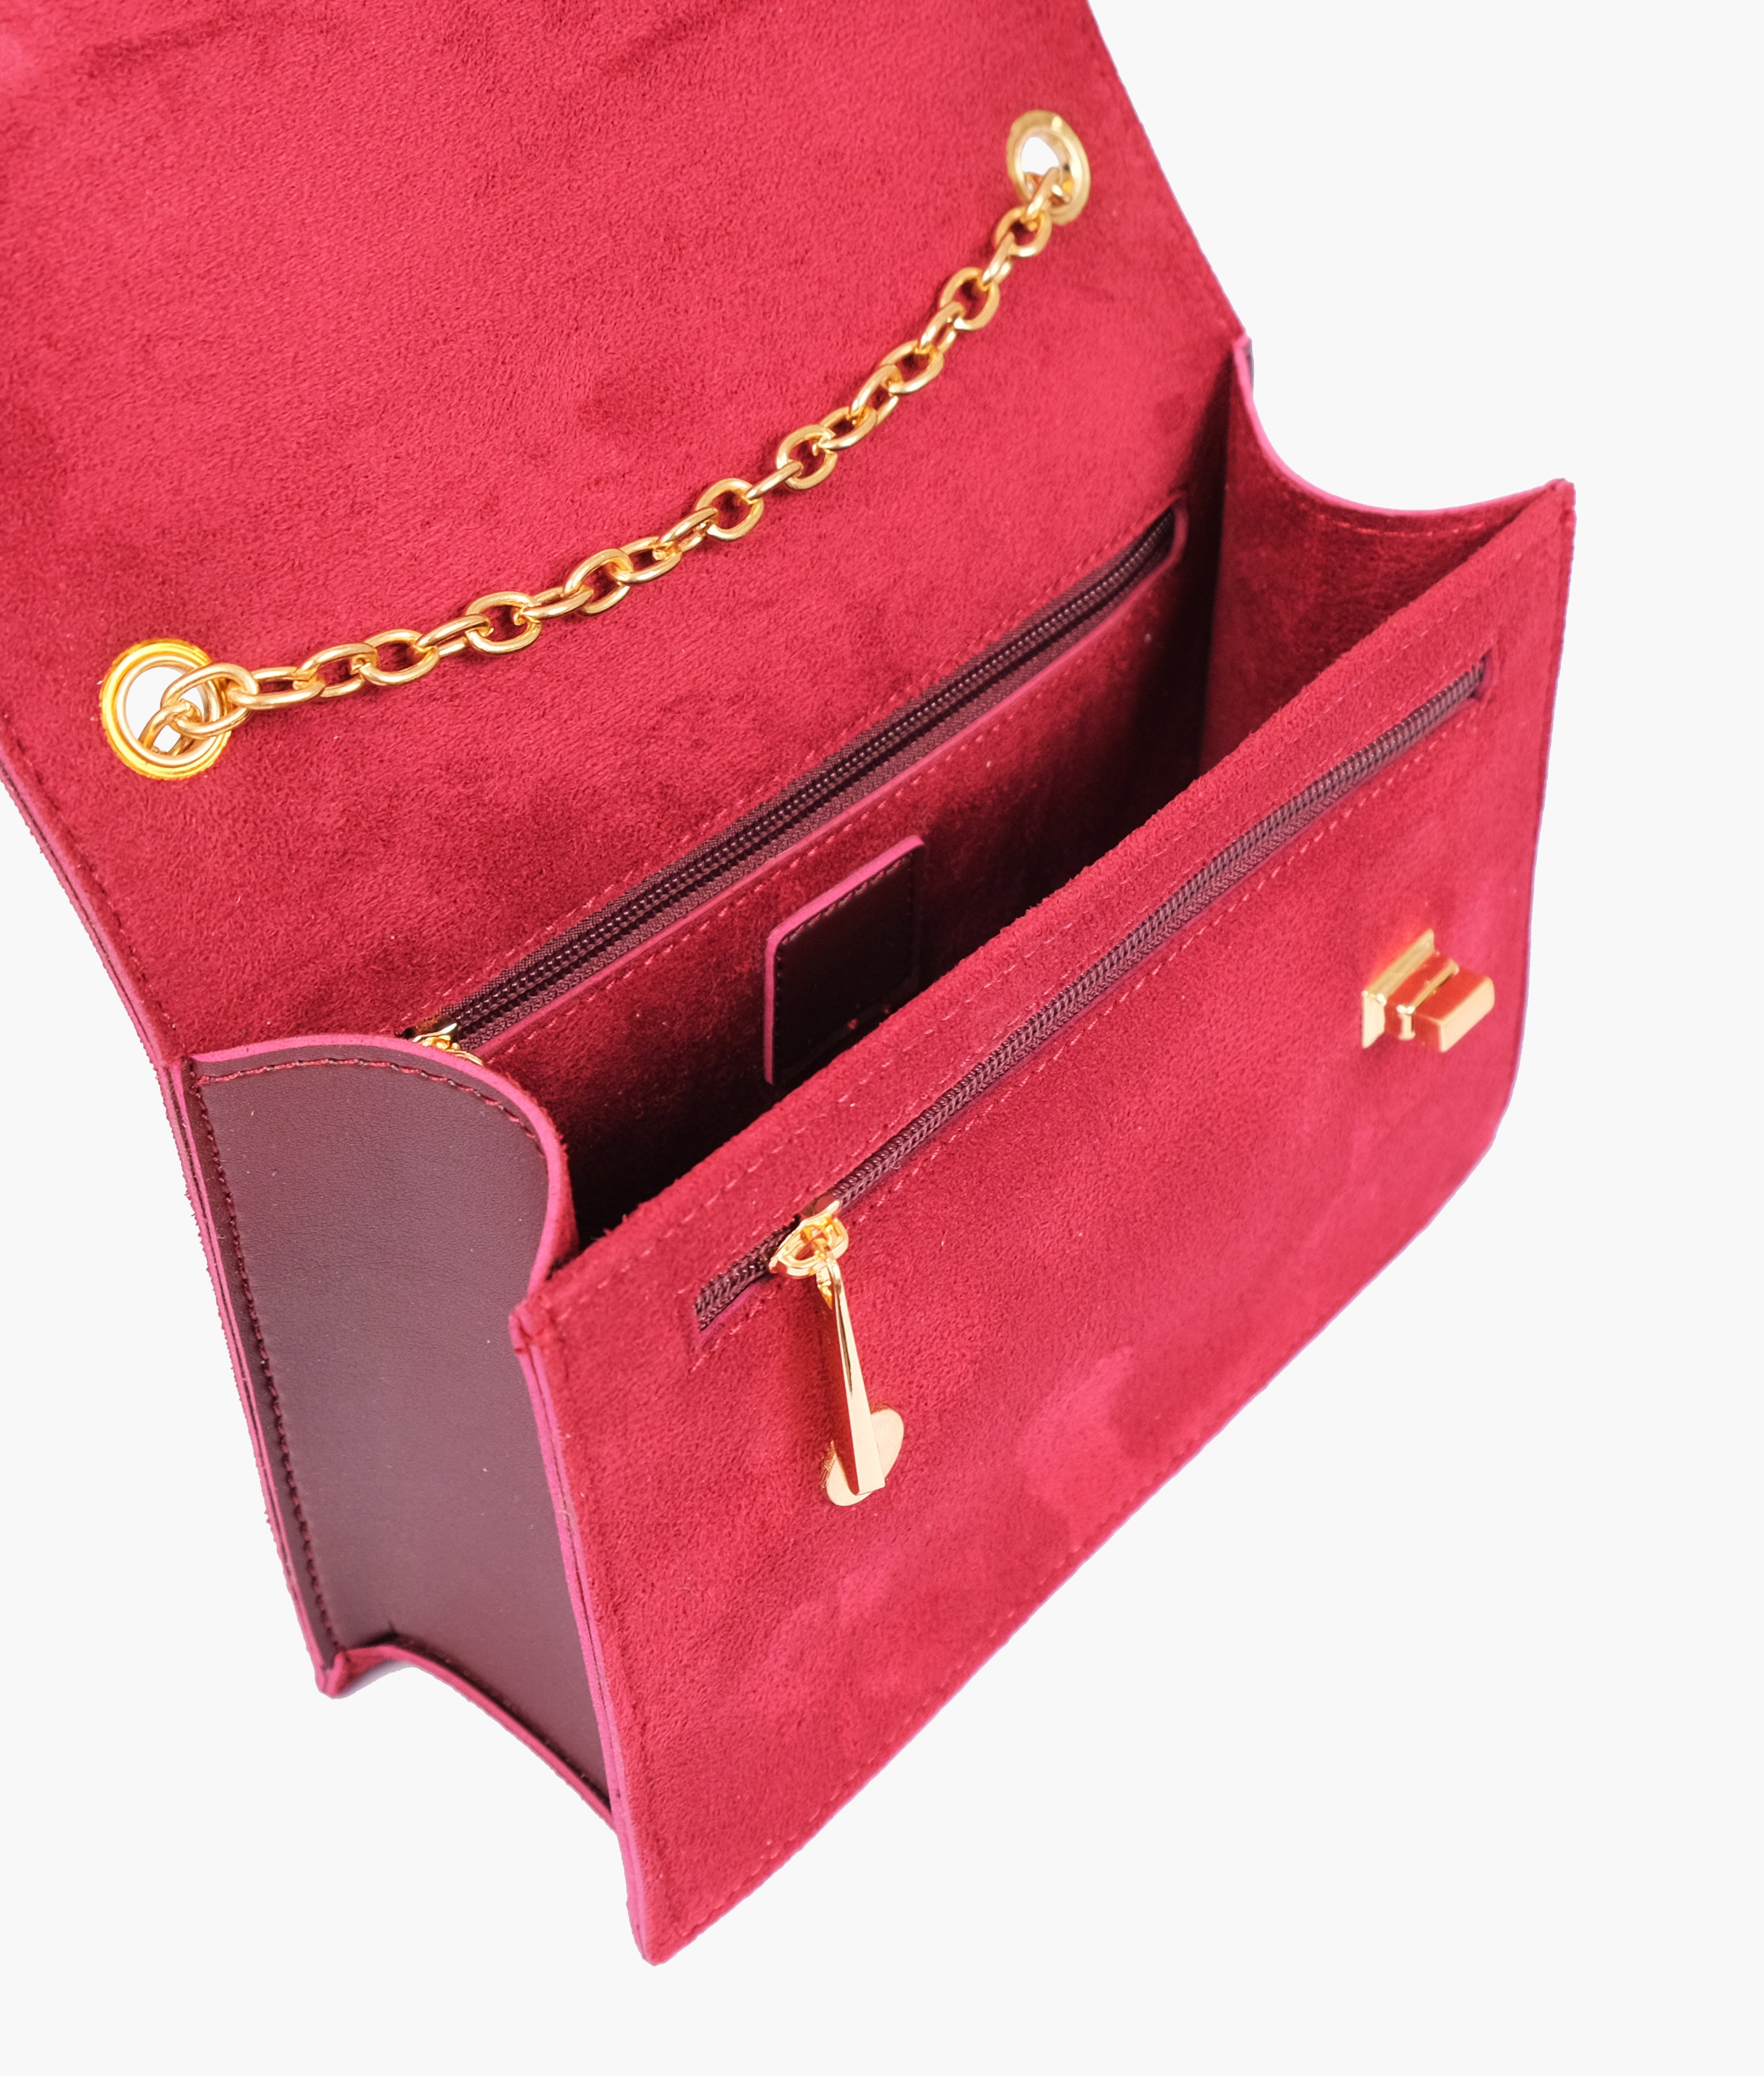 Burgundy suede chain shoulder bag with twist lock